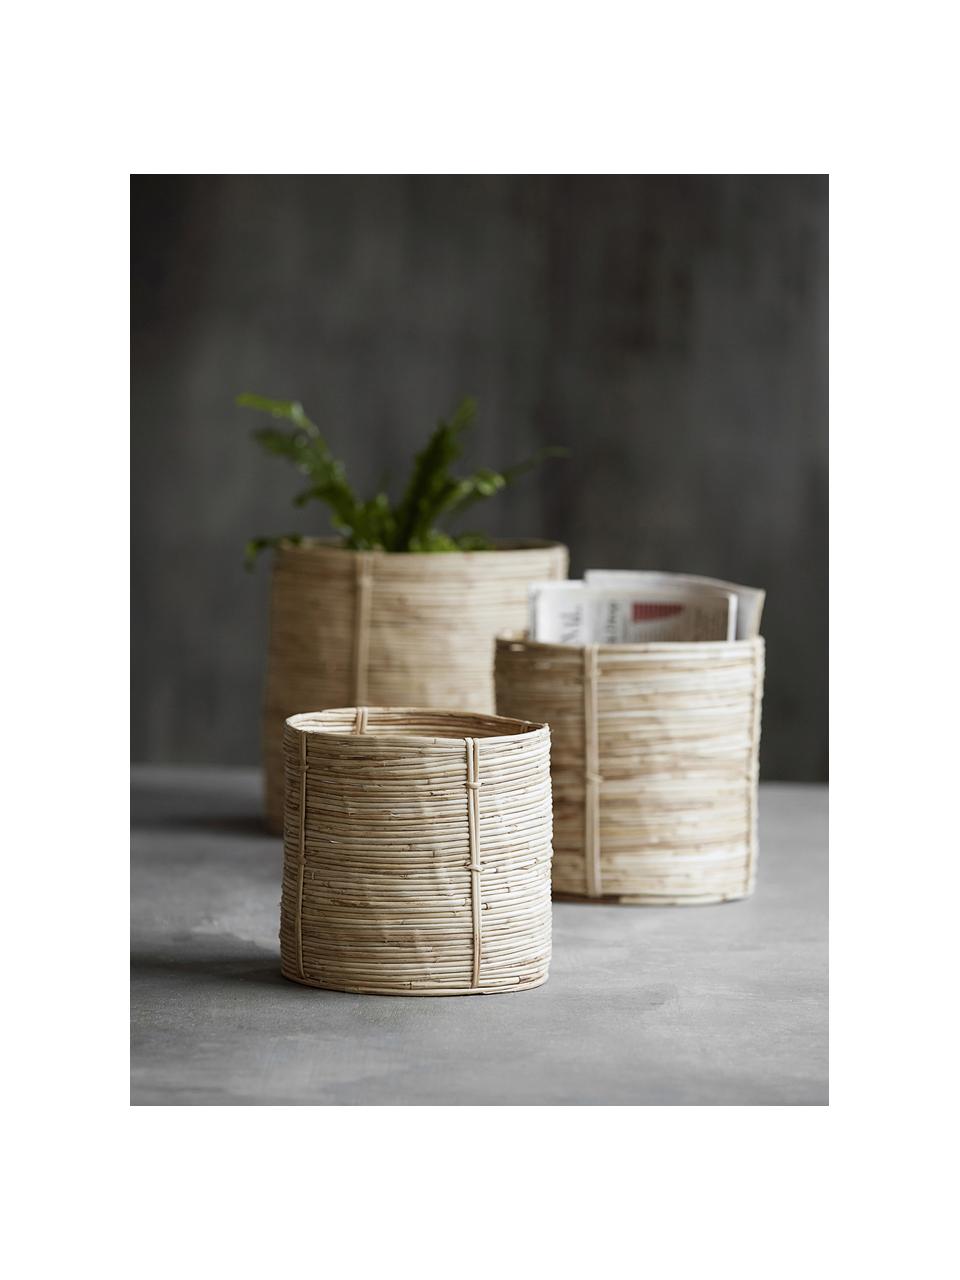 Set de cestas Chaka, 3 uds., Ratán, bambú, Marrón, Set de diferentes tamaños